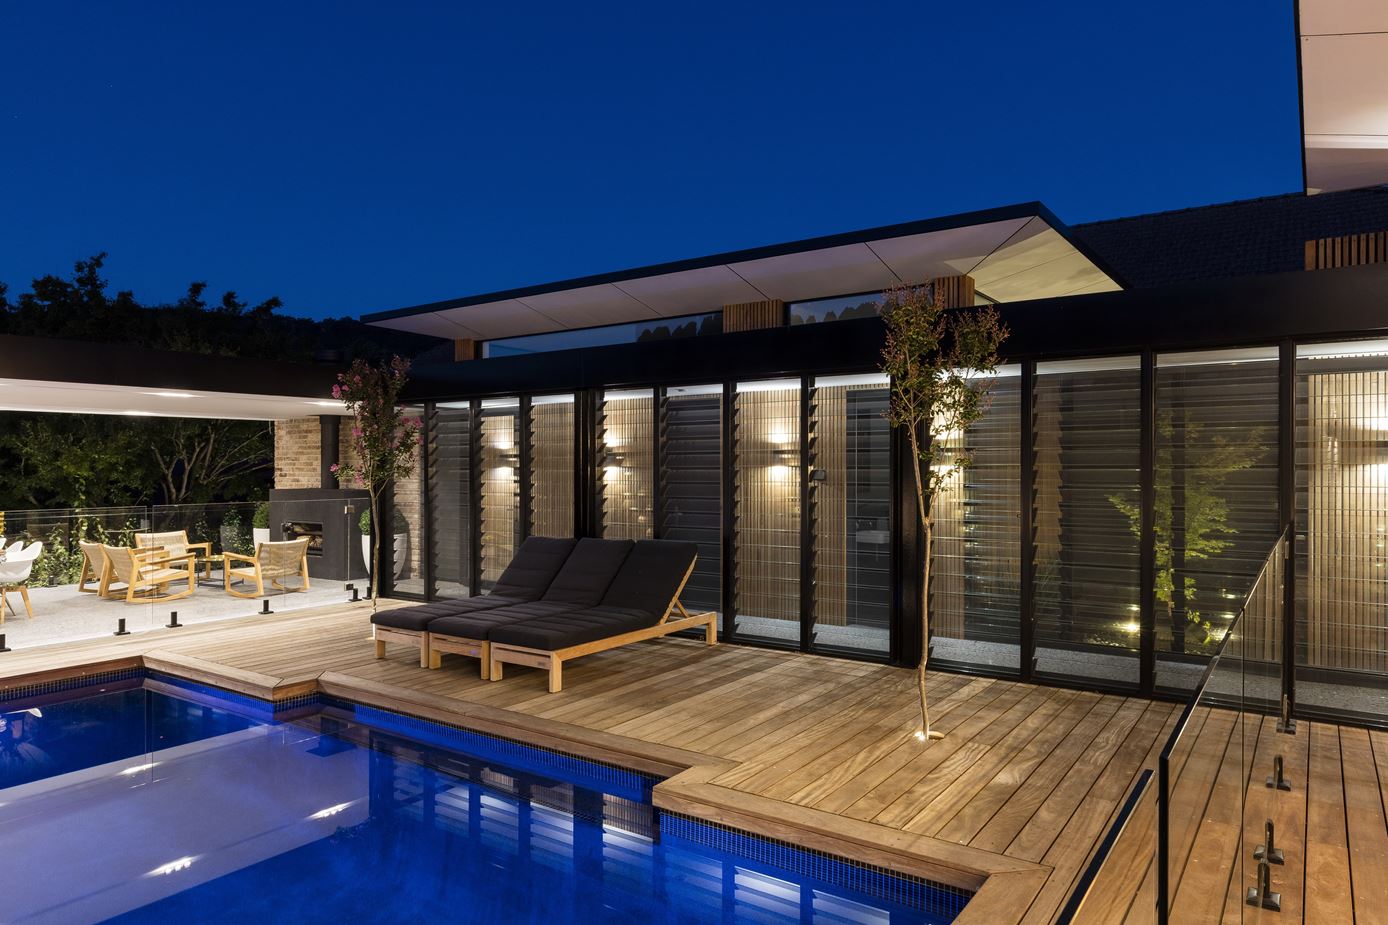 Bundaroo House in Bowral, Australia by Tziallas Omeara Architecture Studio